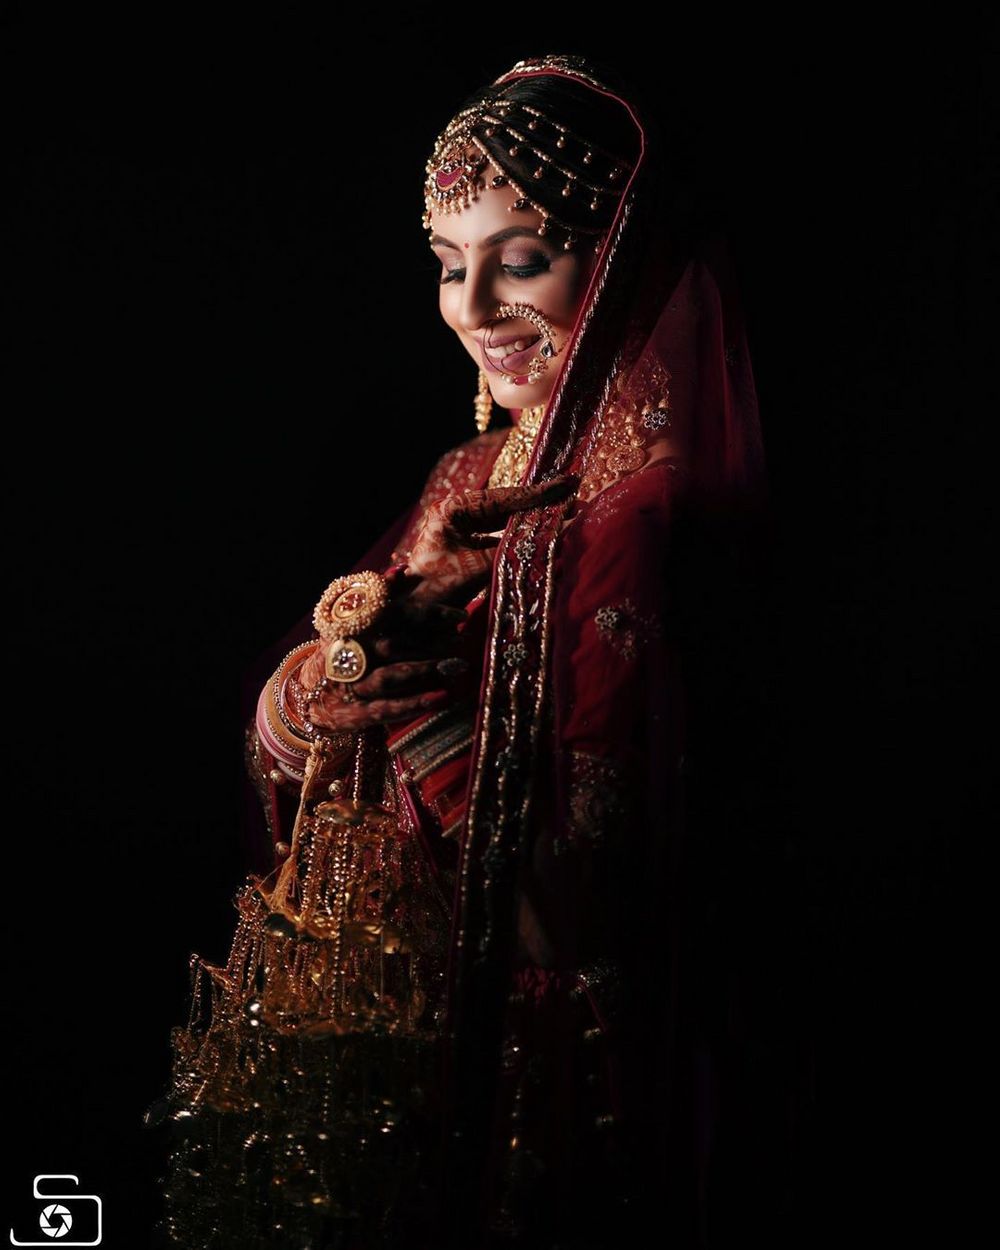 Photo From Payal and Nishant - Wedding Shoot - Safarsaga Films - By Safarsaga Films